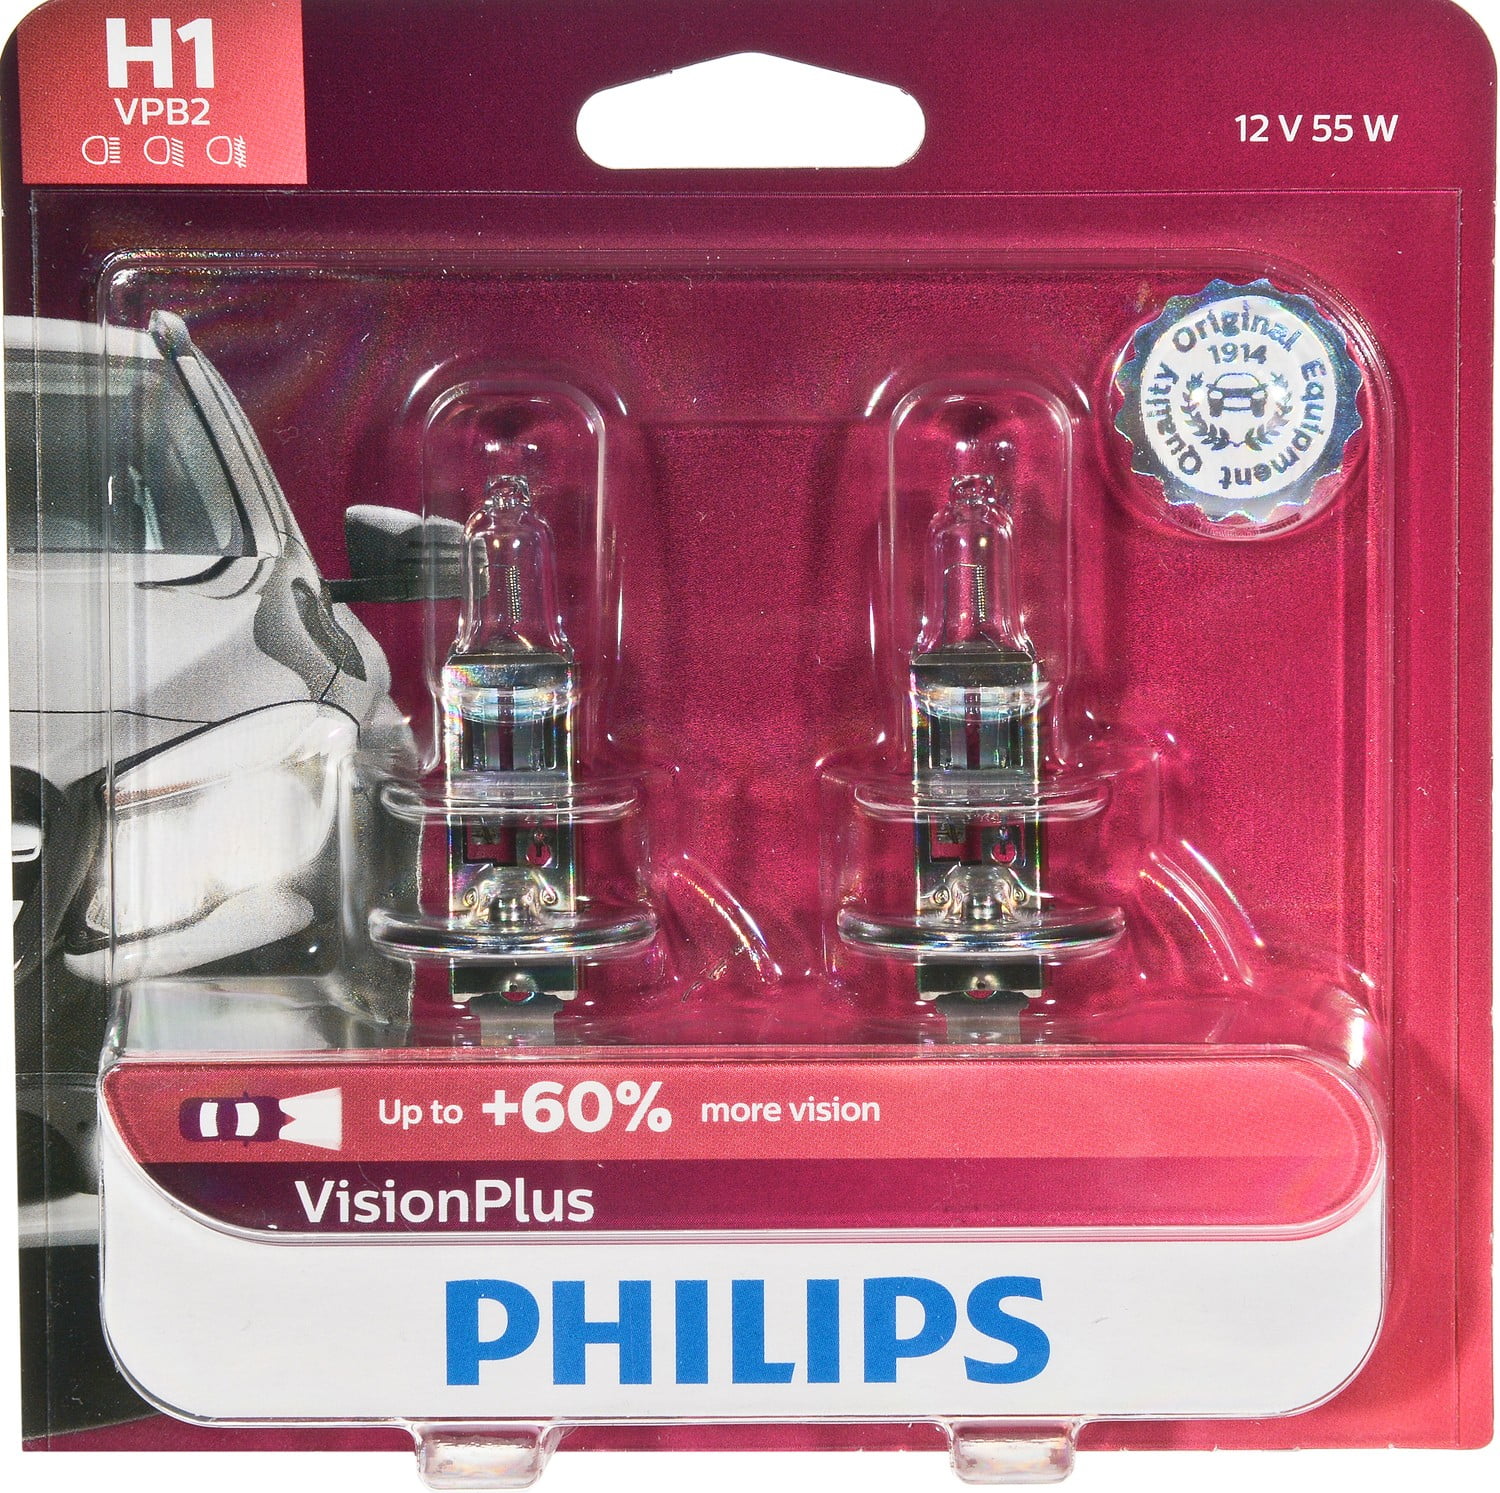 Philips H1 Visionplus Headlight, Pack of 2 